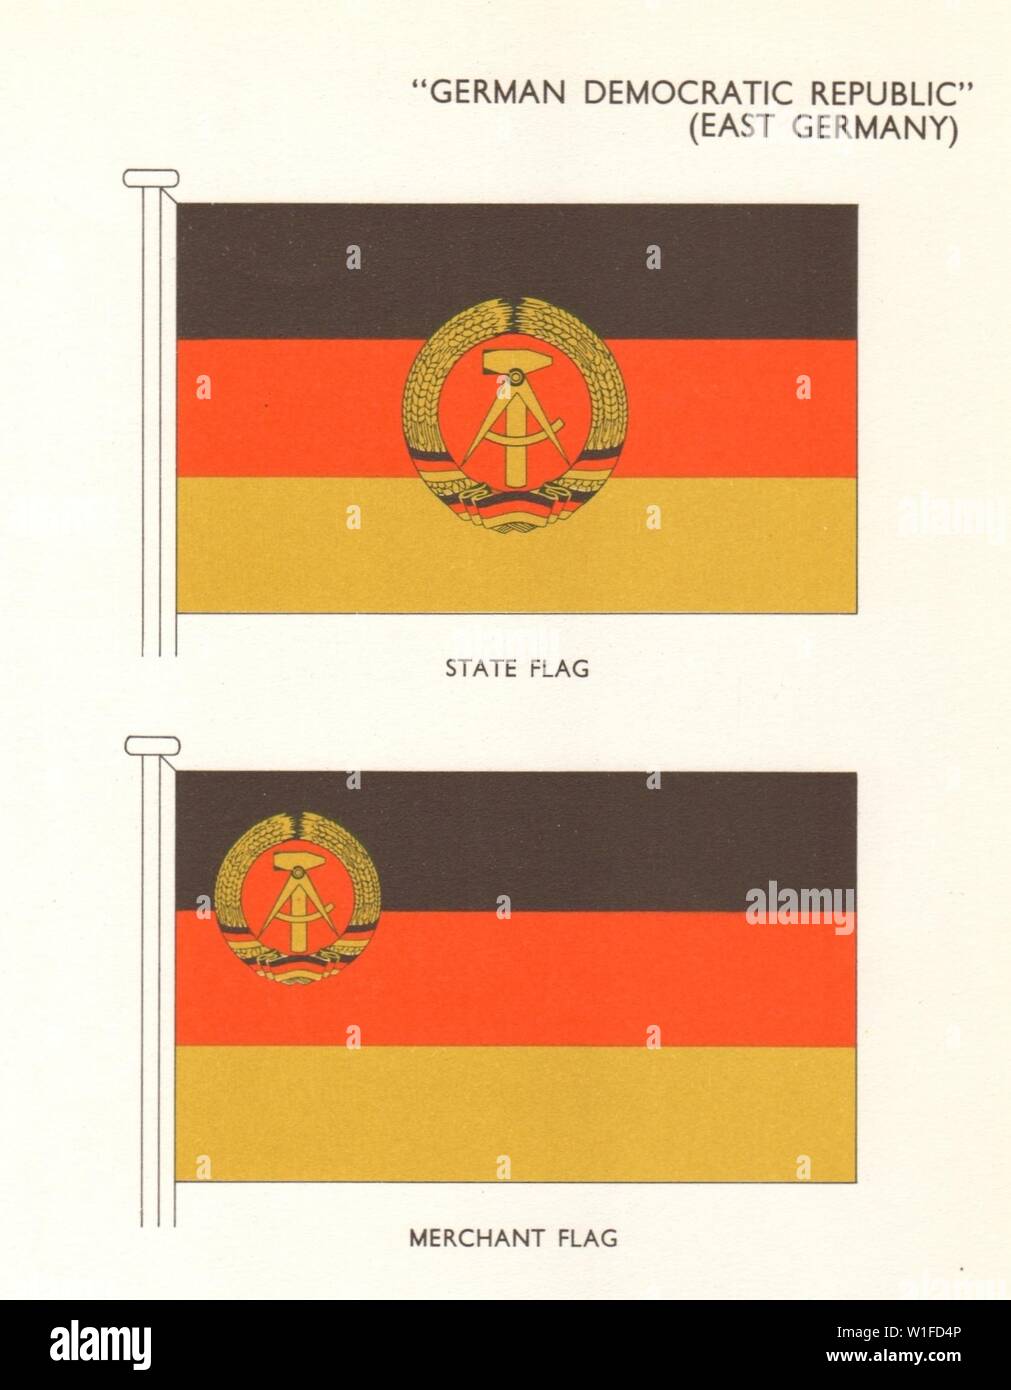 Deutsche Demokratische Republik Fahnen. Osten Deutschlands. Staatsflagge, Merchant Flag 1964 Stockfoto